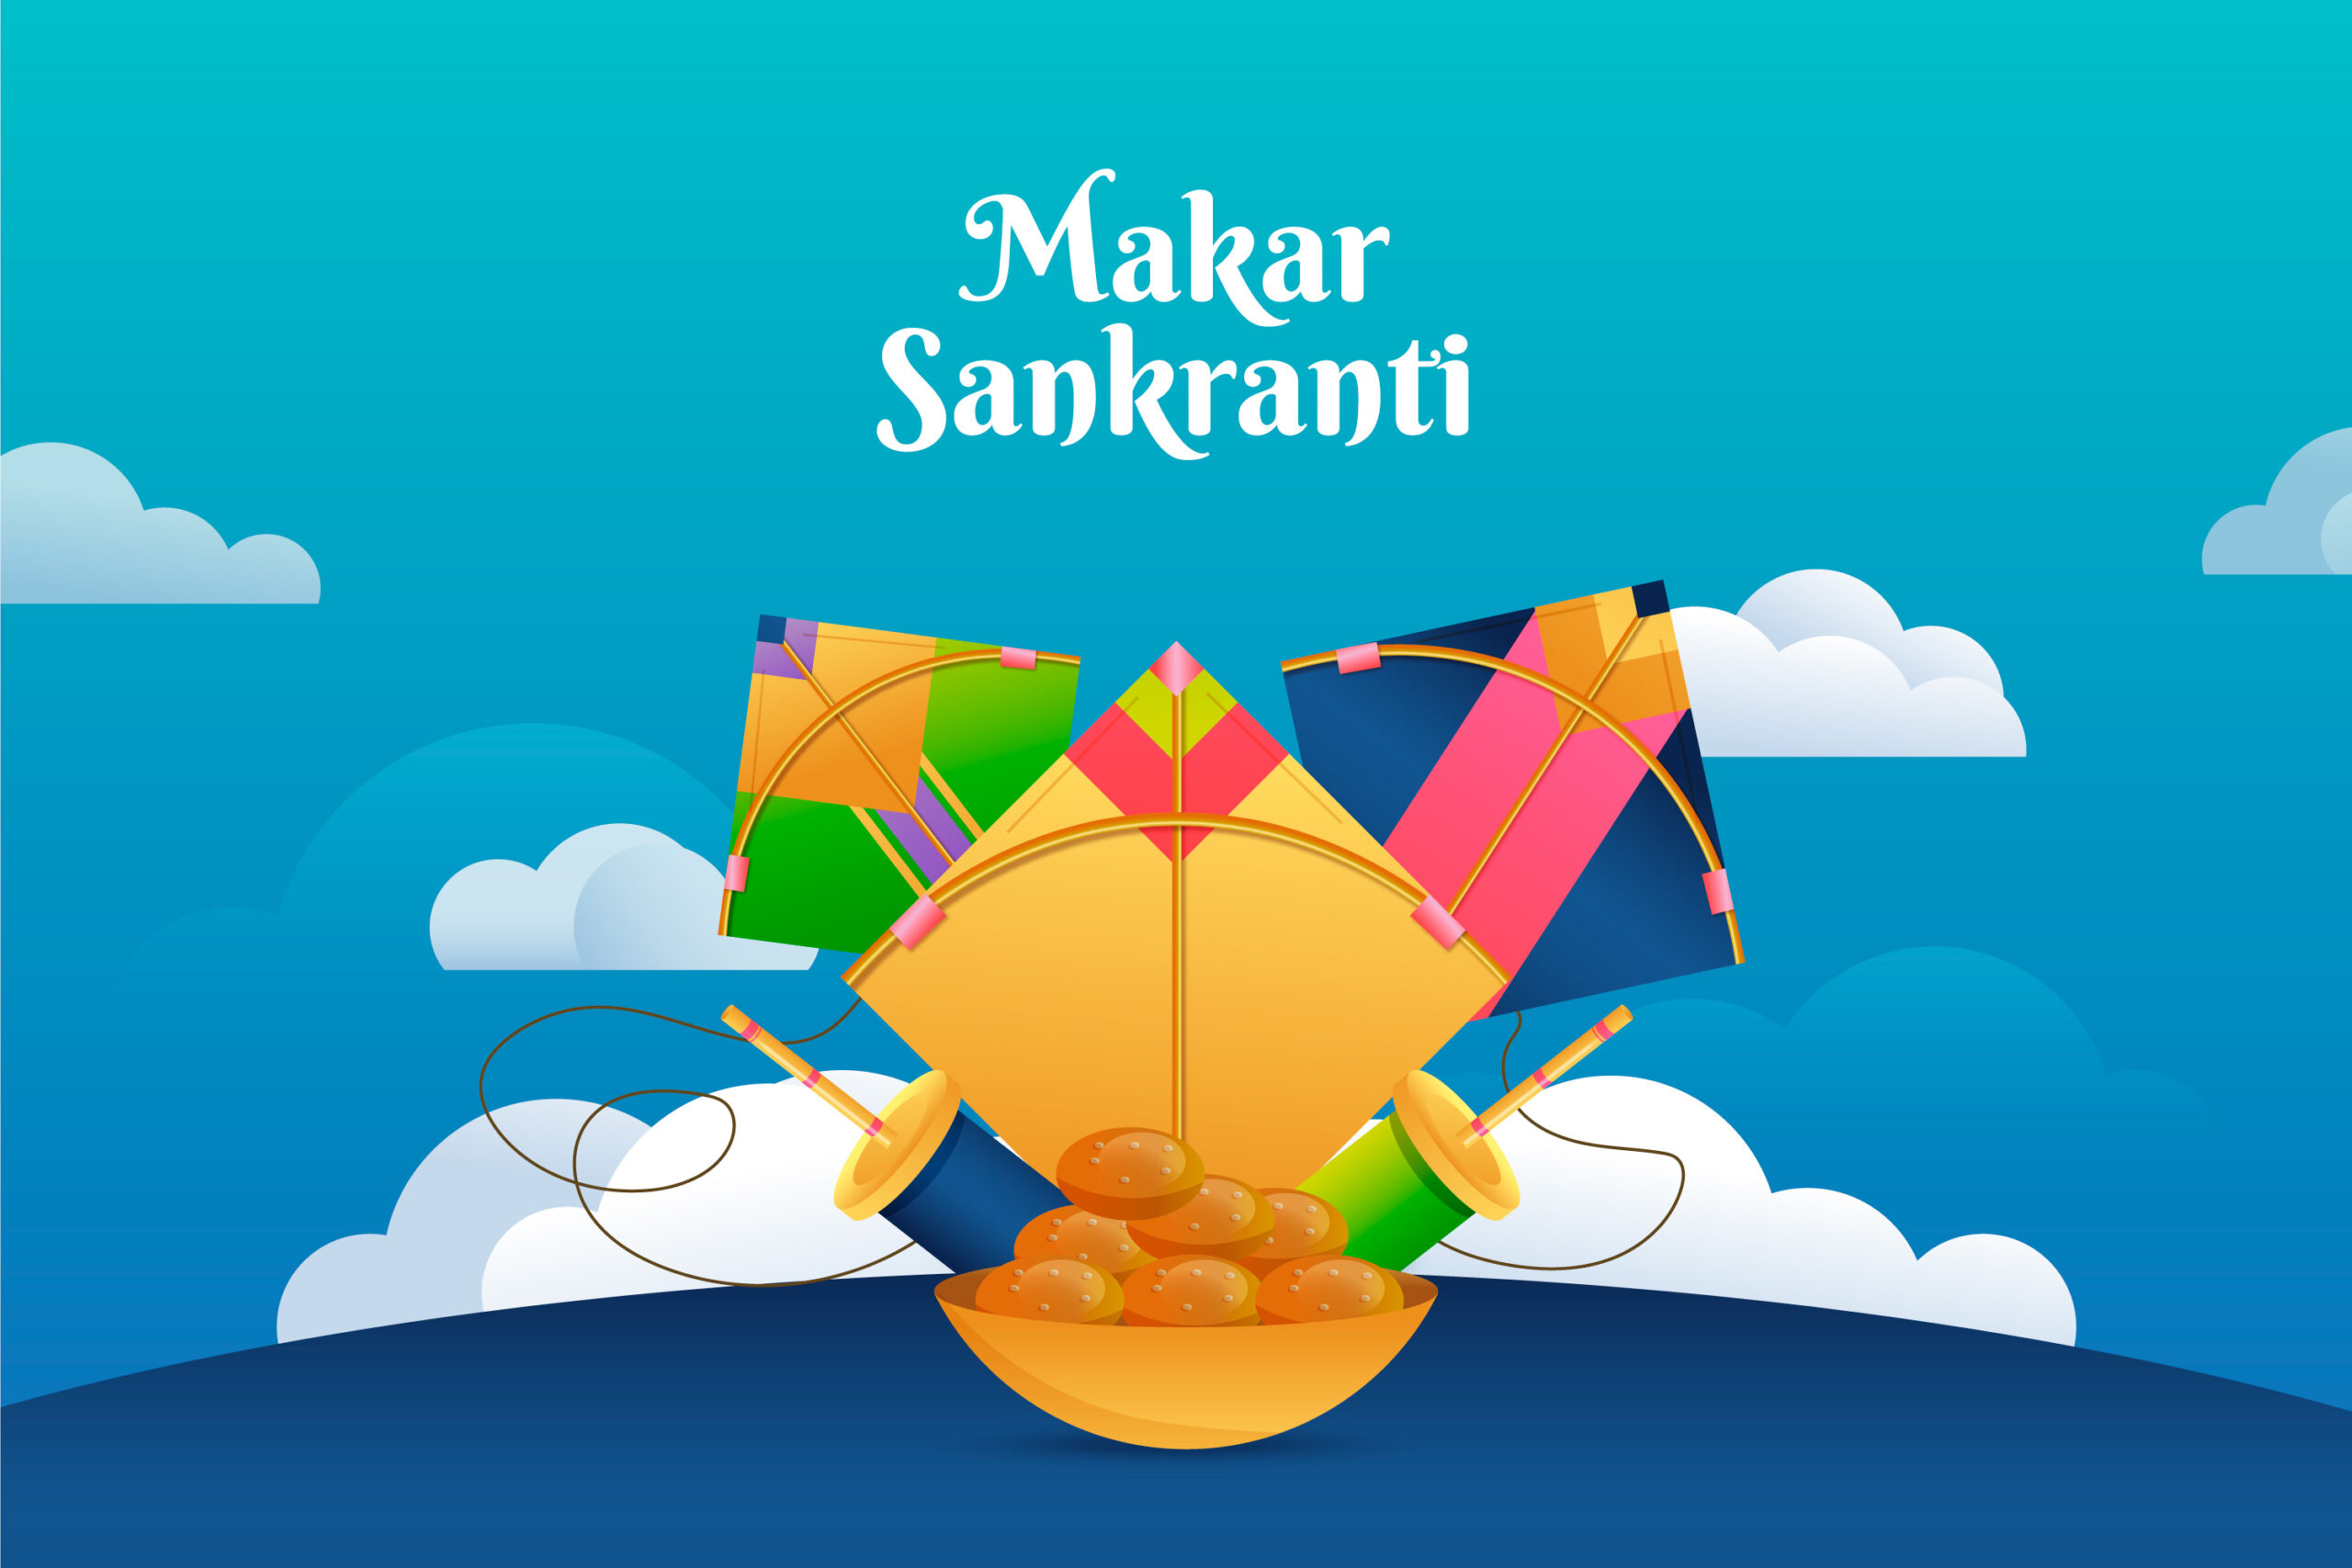 Makar Sankranti: The Festival of Nature and Harvesting